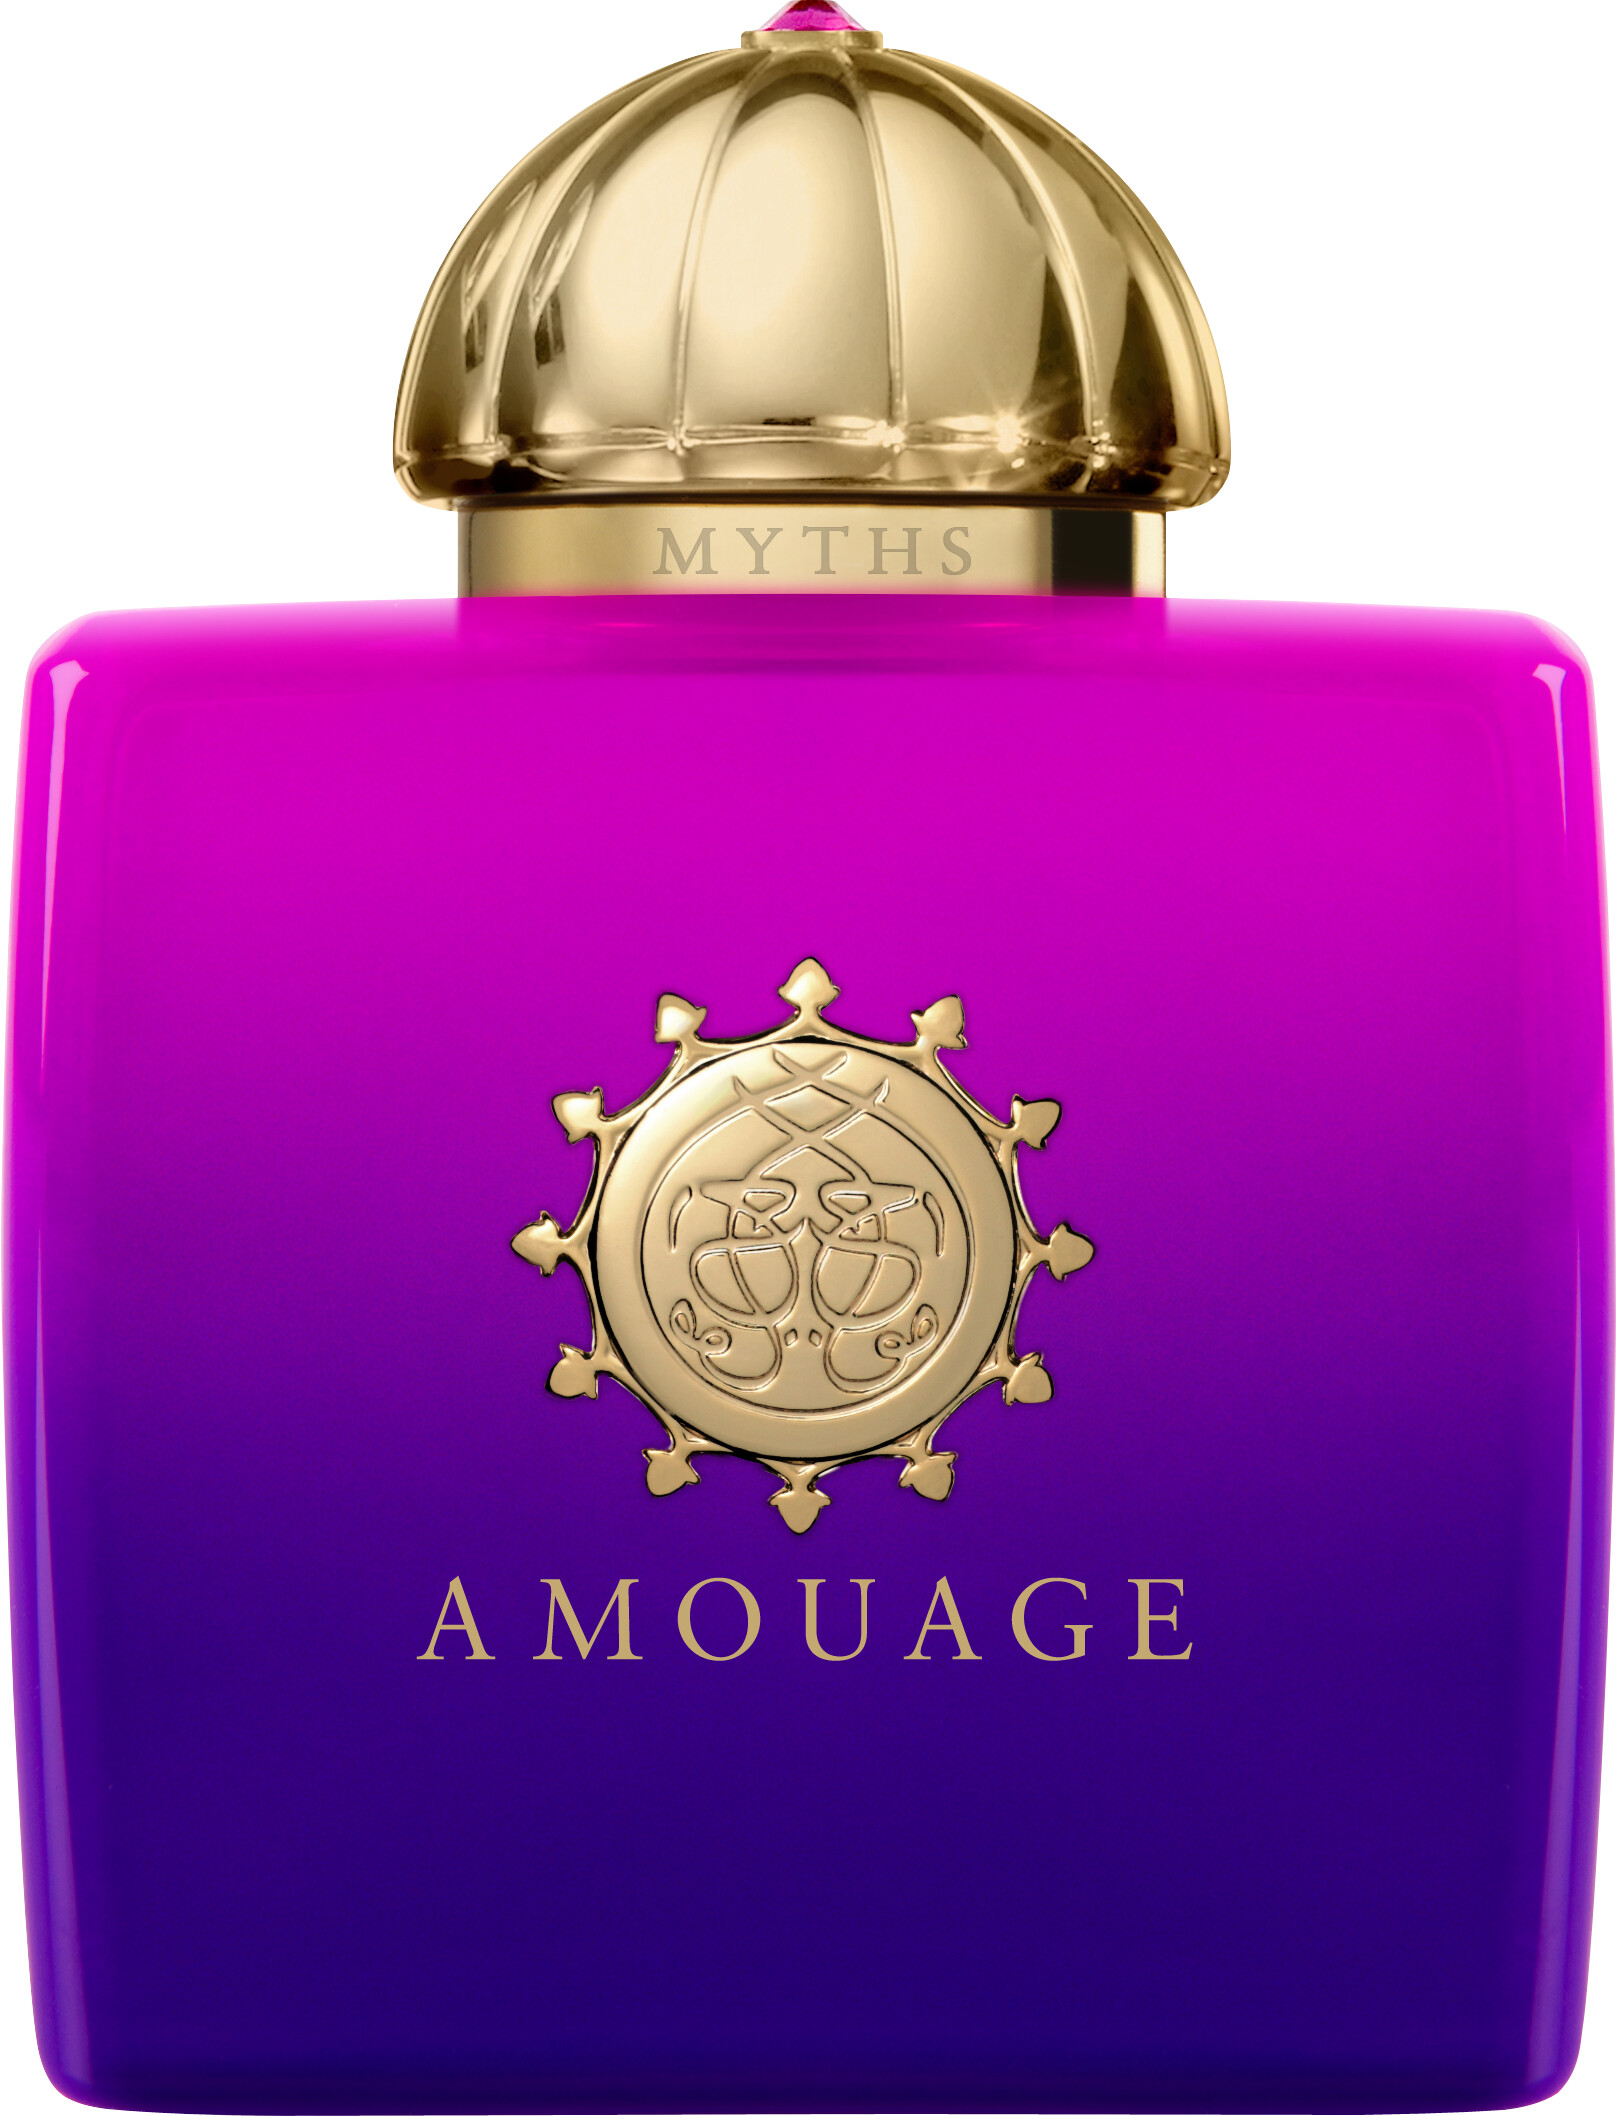 Amouage Myths Woman Eau de Parfum Spray